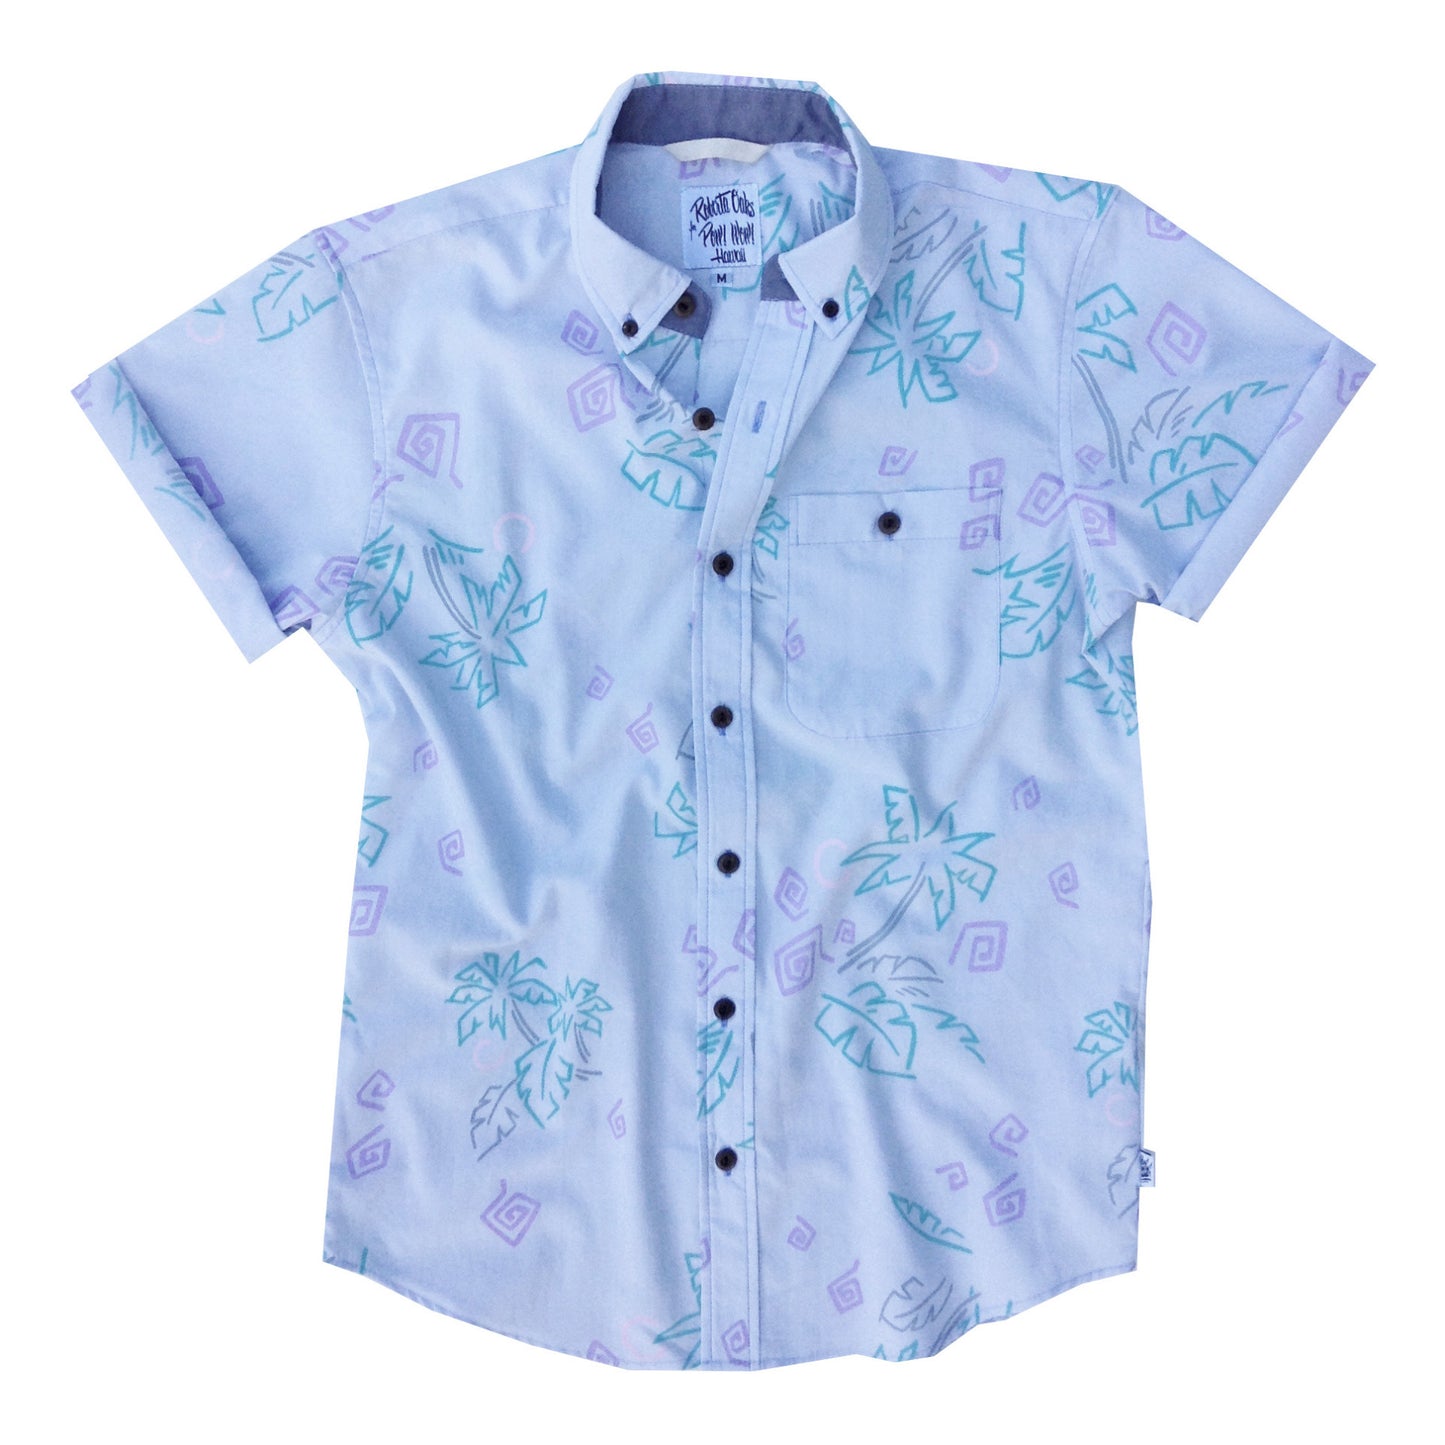 Pow! Wow! Hawaii 2017 Ilaniwai Shirt